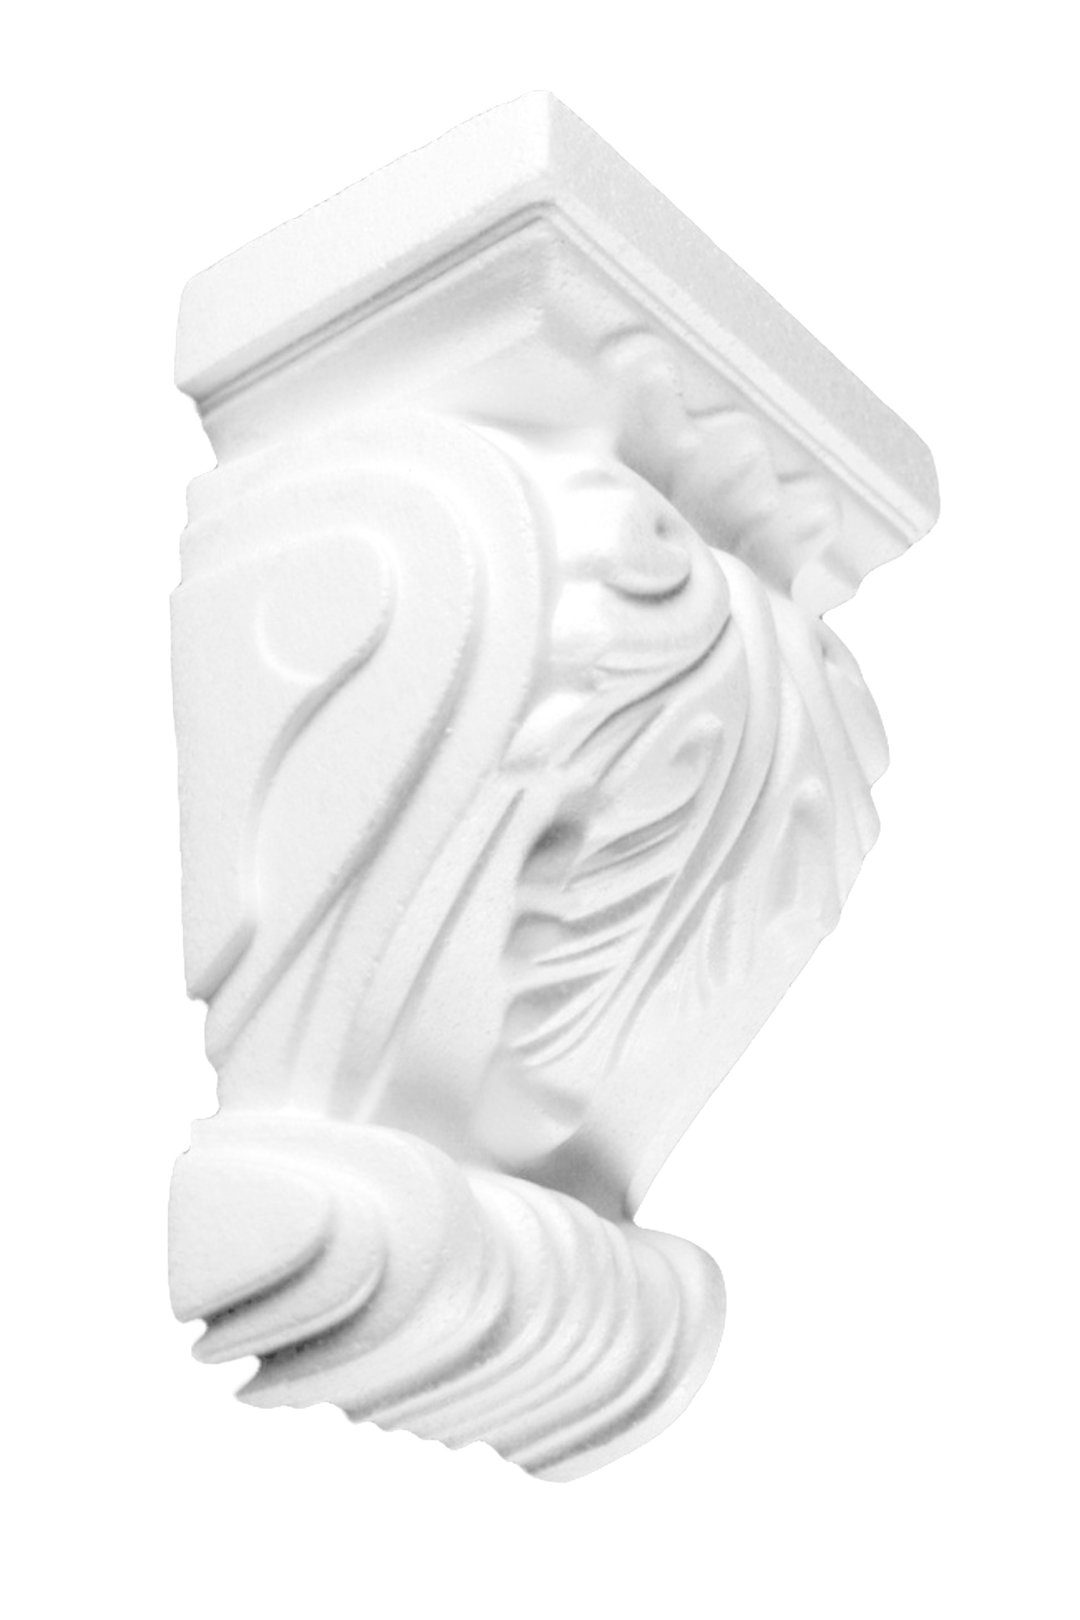 Dekor Wand (Konsole Wanddekoobjekt marbet Dekorativ 11,5x16,5cm) Weiß Stuck K-02 design EPS